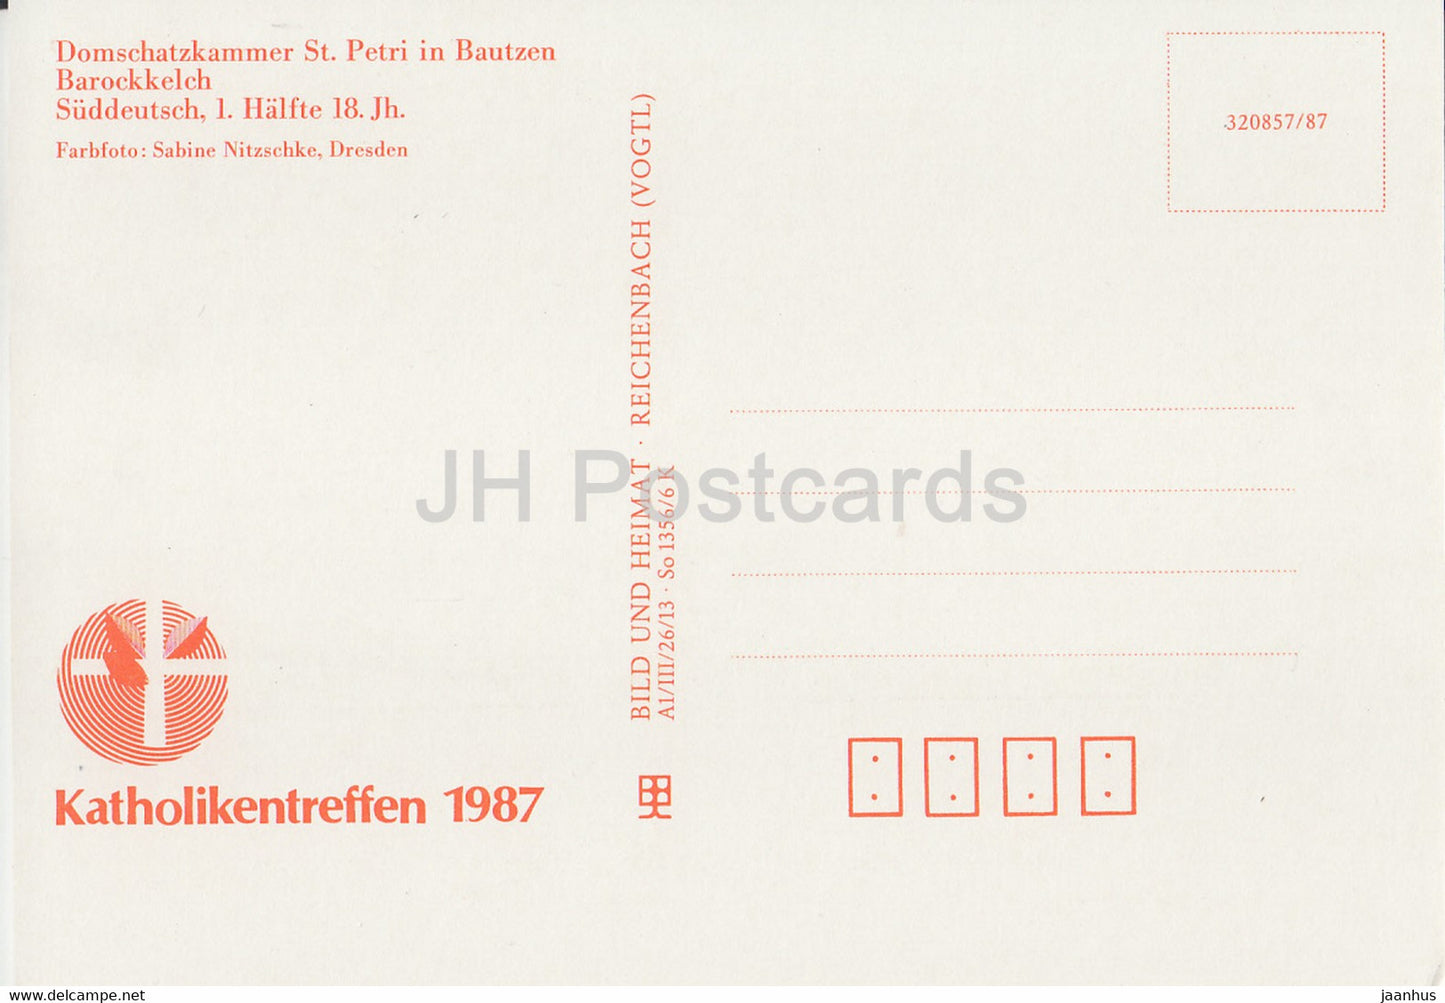 Barockkelch - chalice - Domschatzkammer St Petri in Bautzen - 1987 - DDR Germany - unused